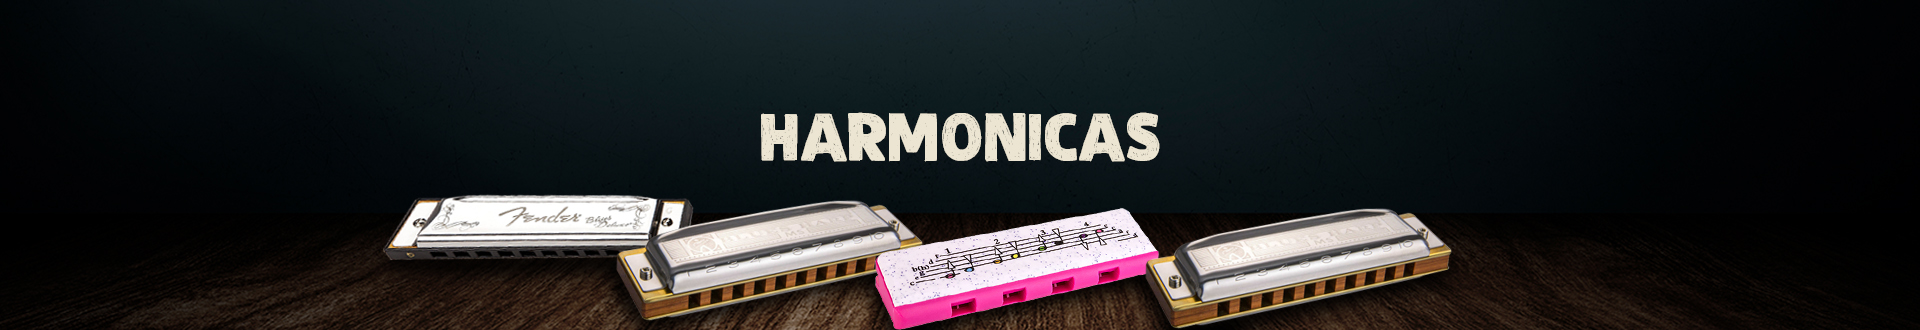 Harmonicas